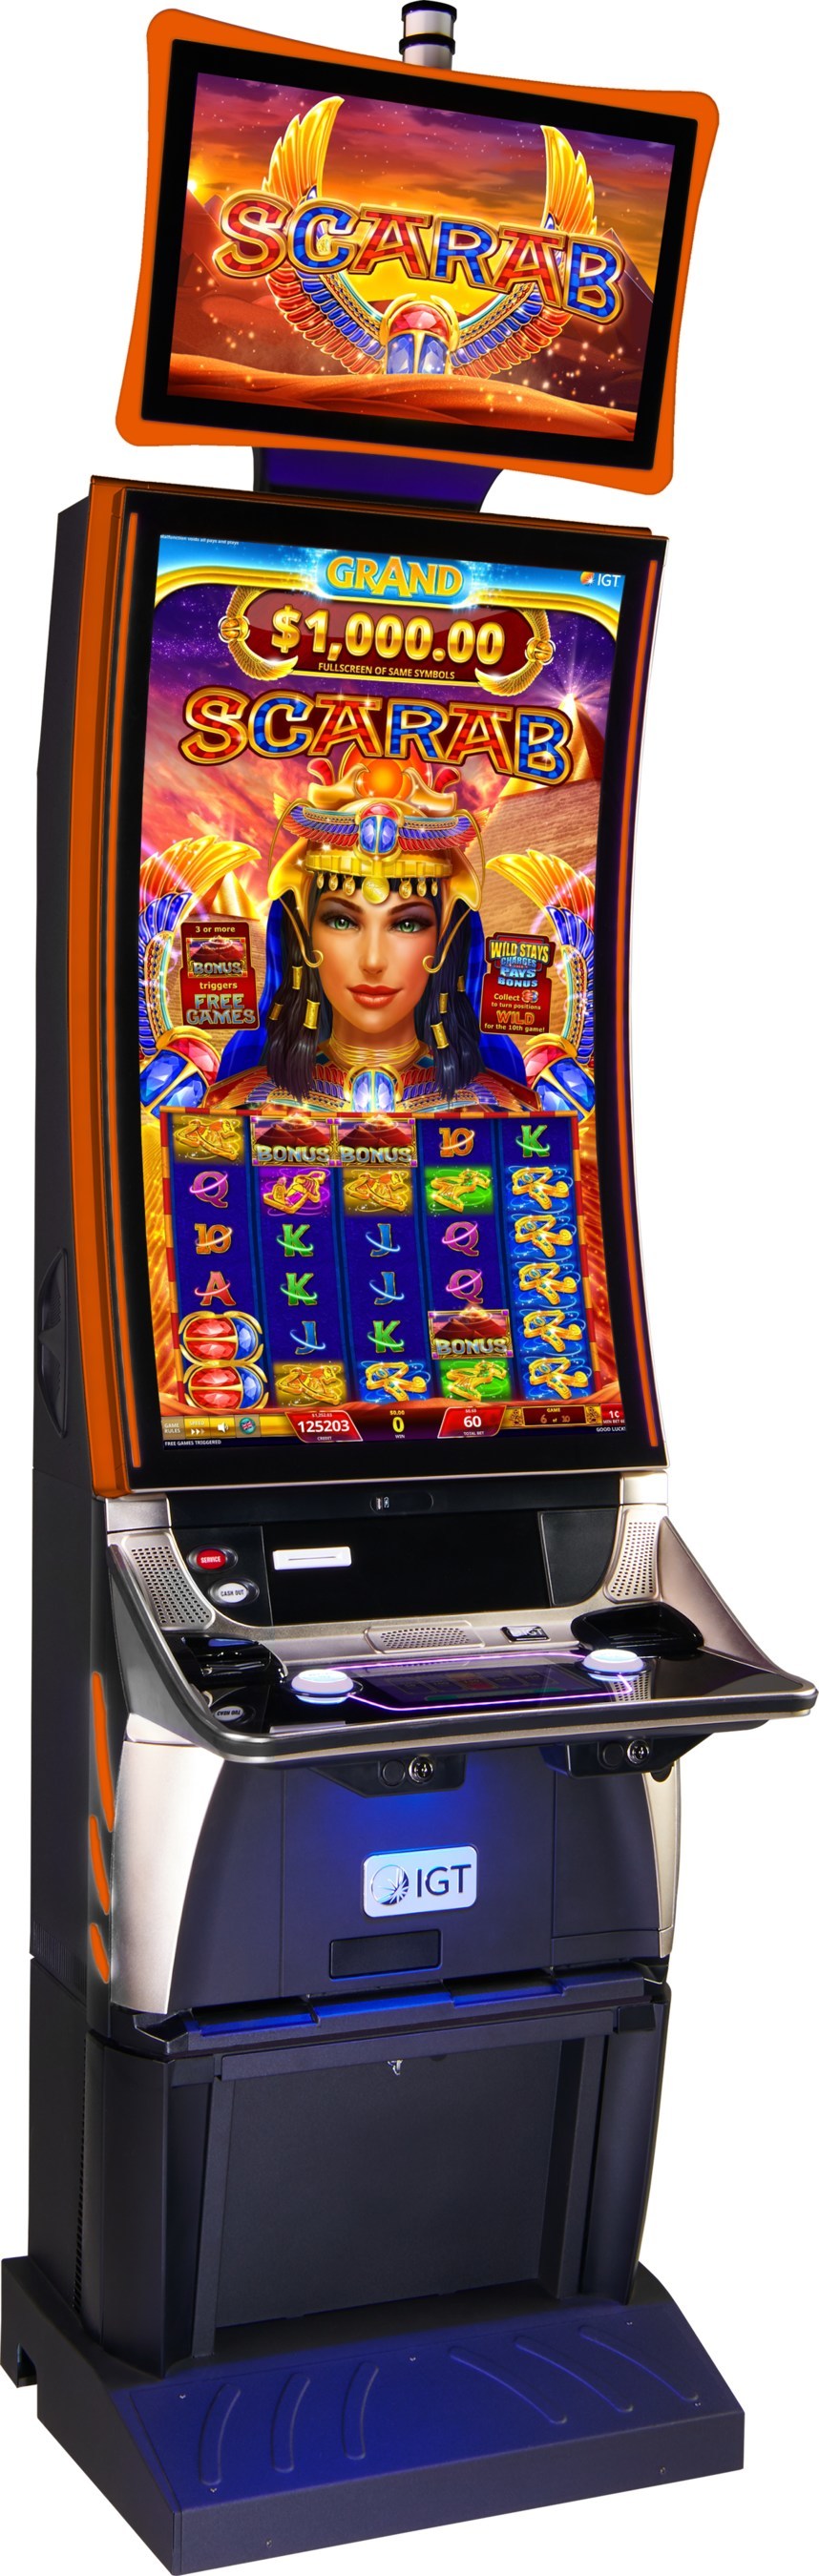 Igt Slot Machine